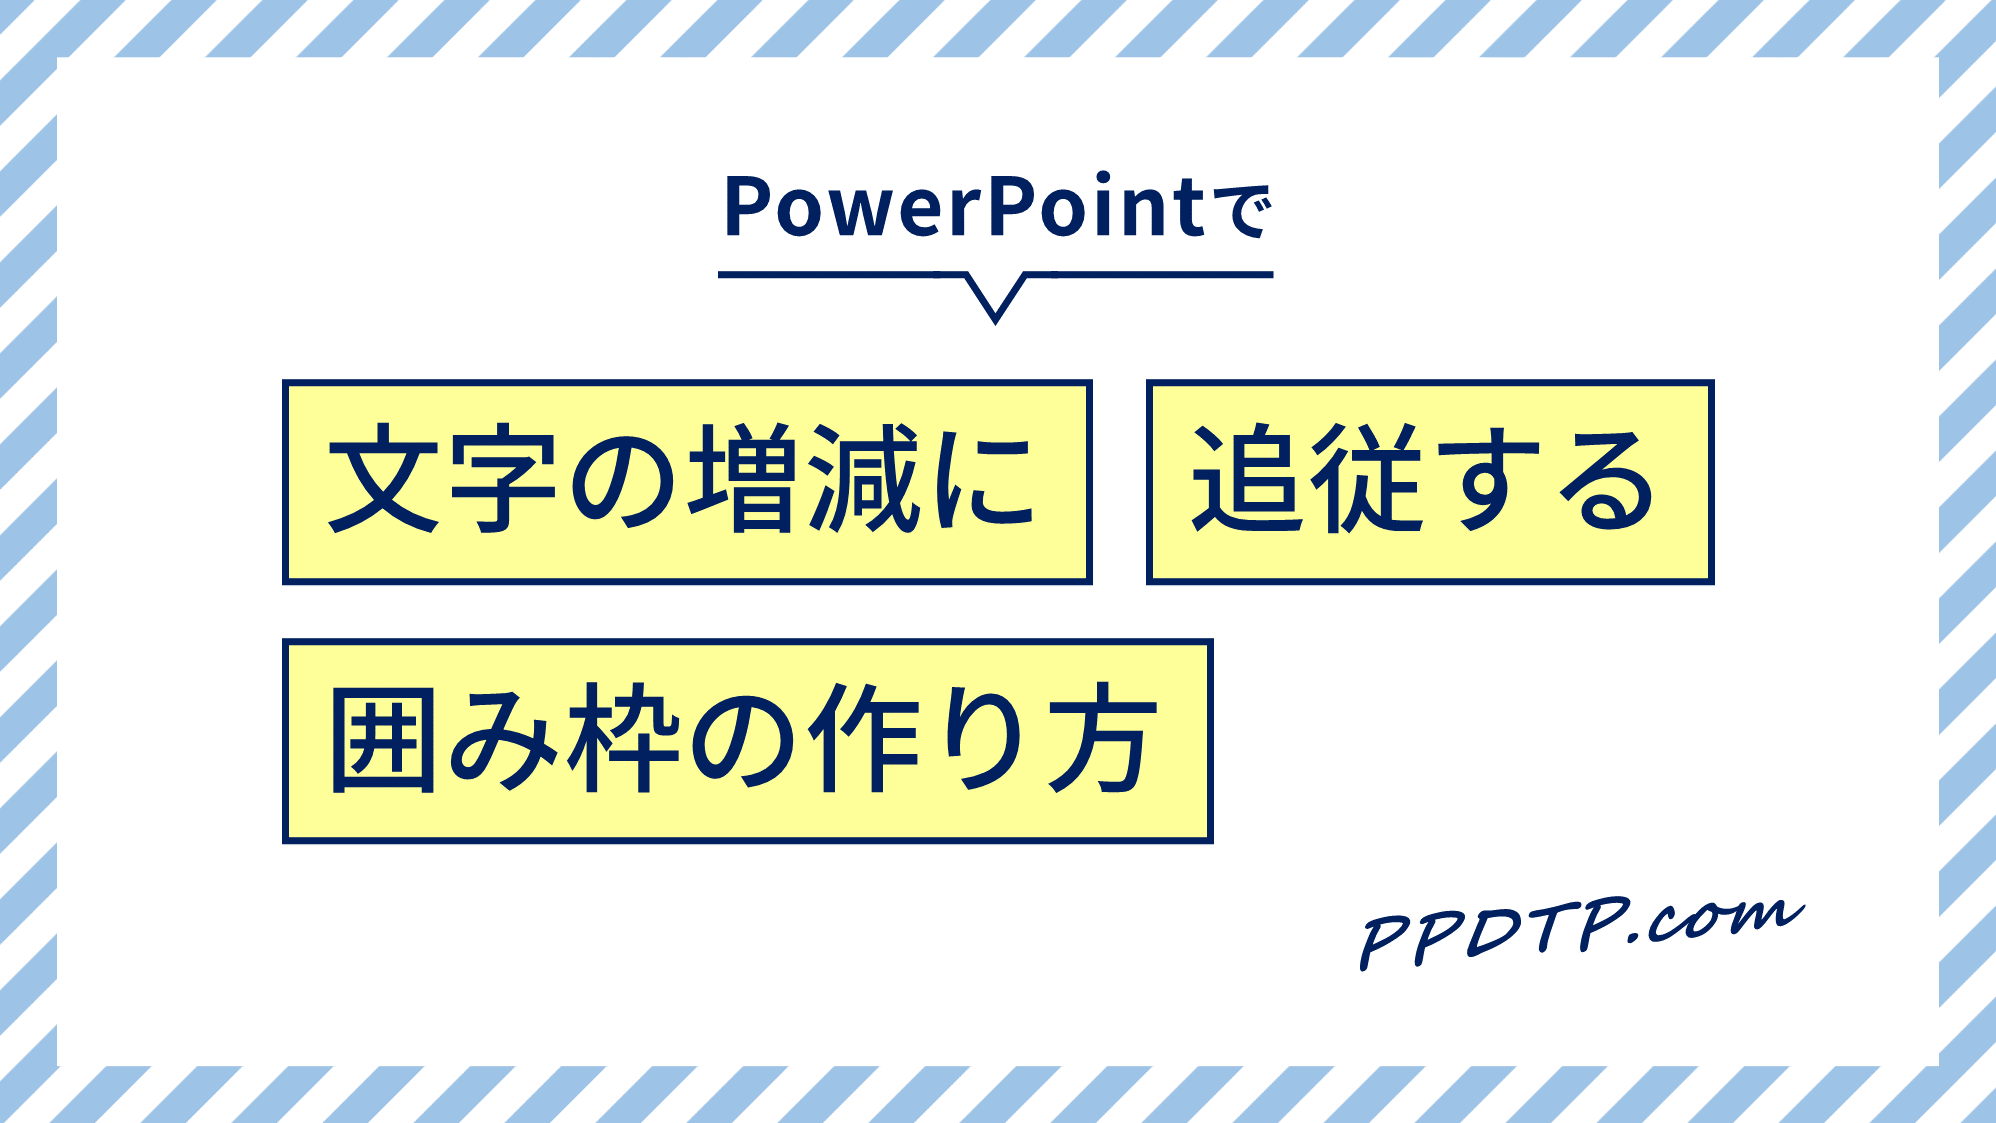 Powerpointで文章の増減に合わせ自動伸縮する囲み枠の作り方 Ppdtp